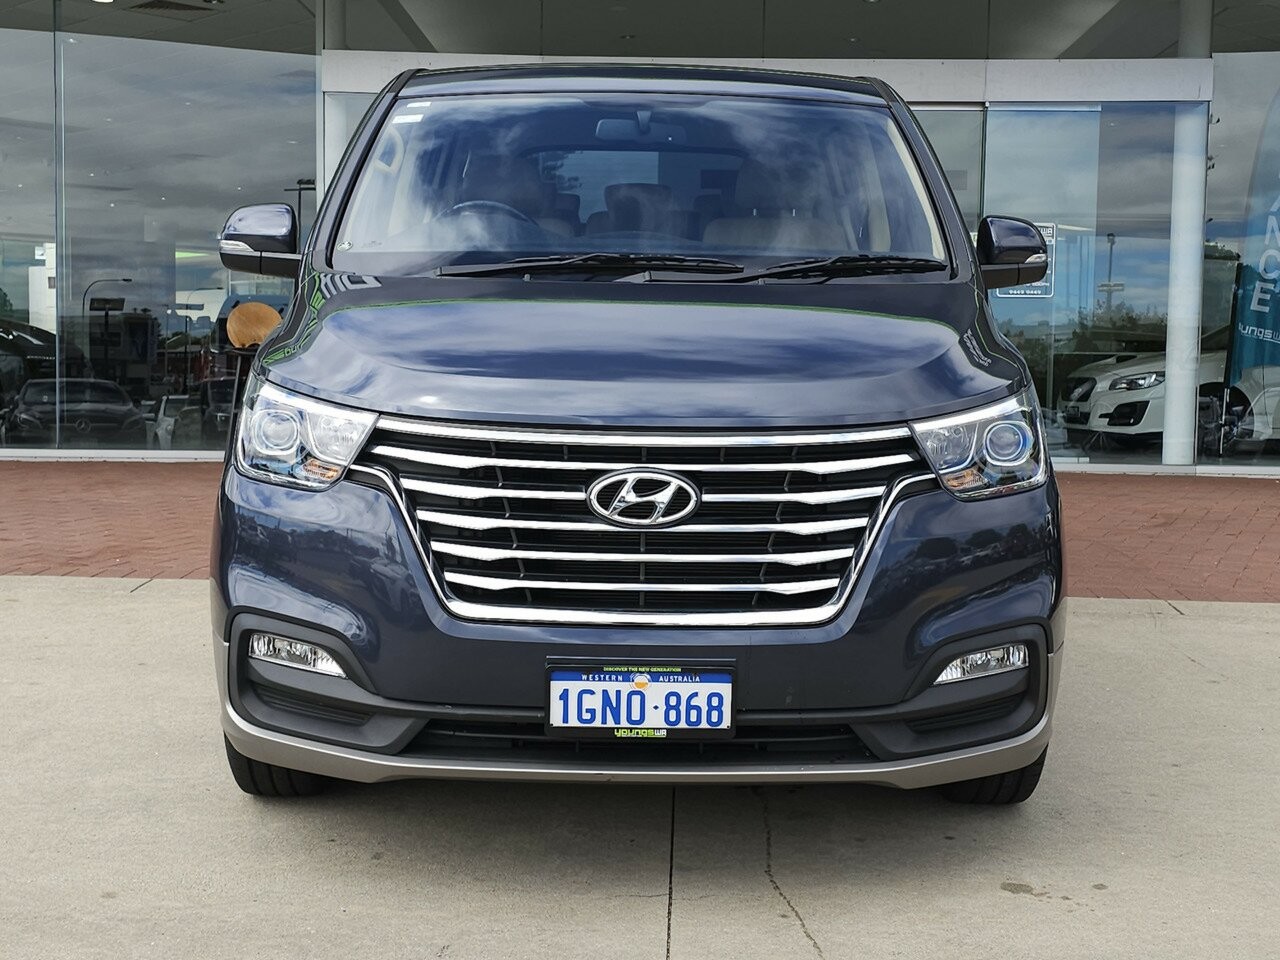 Hyundai Imax image 2